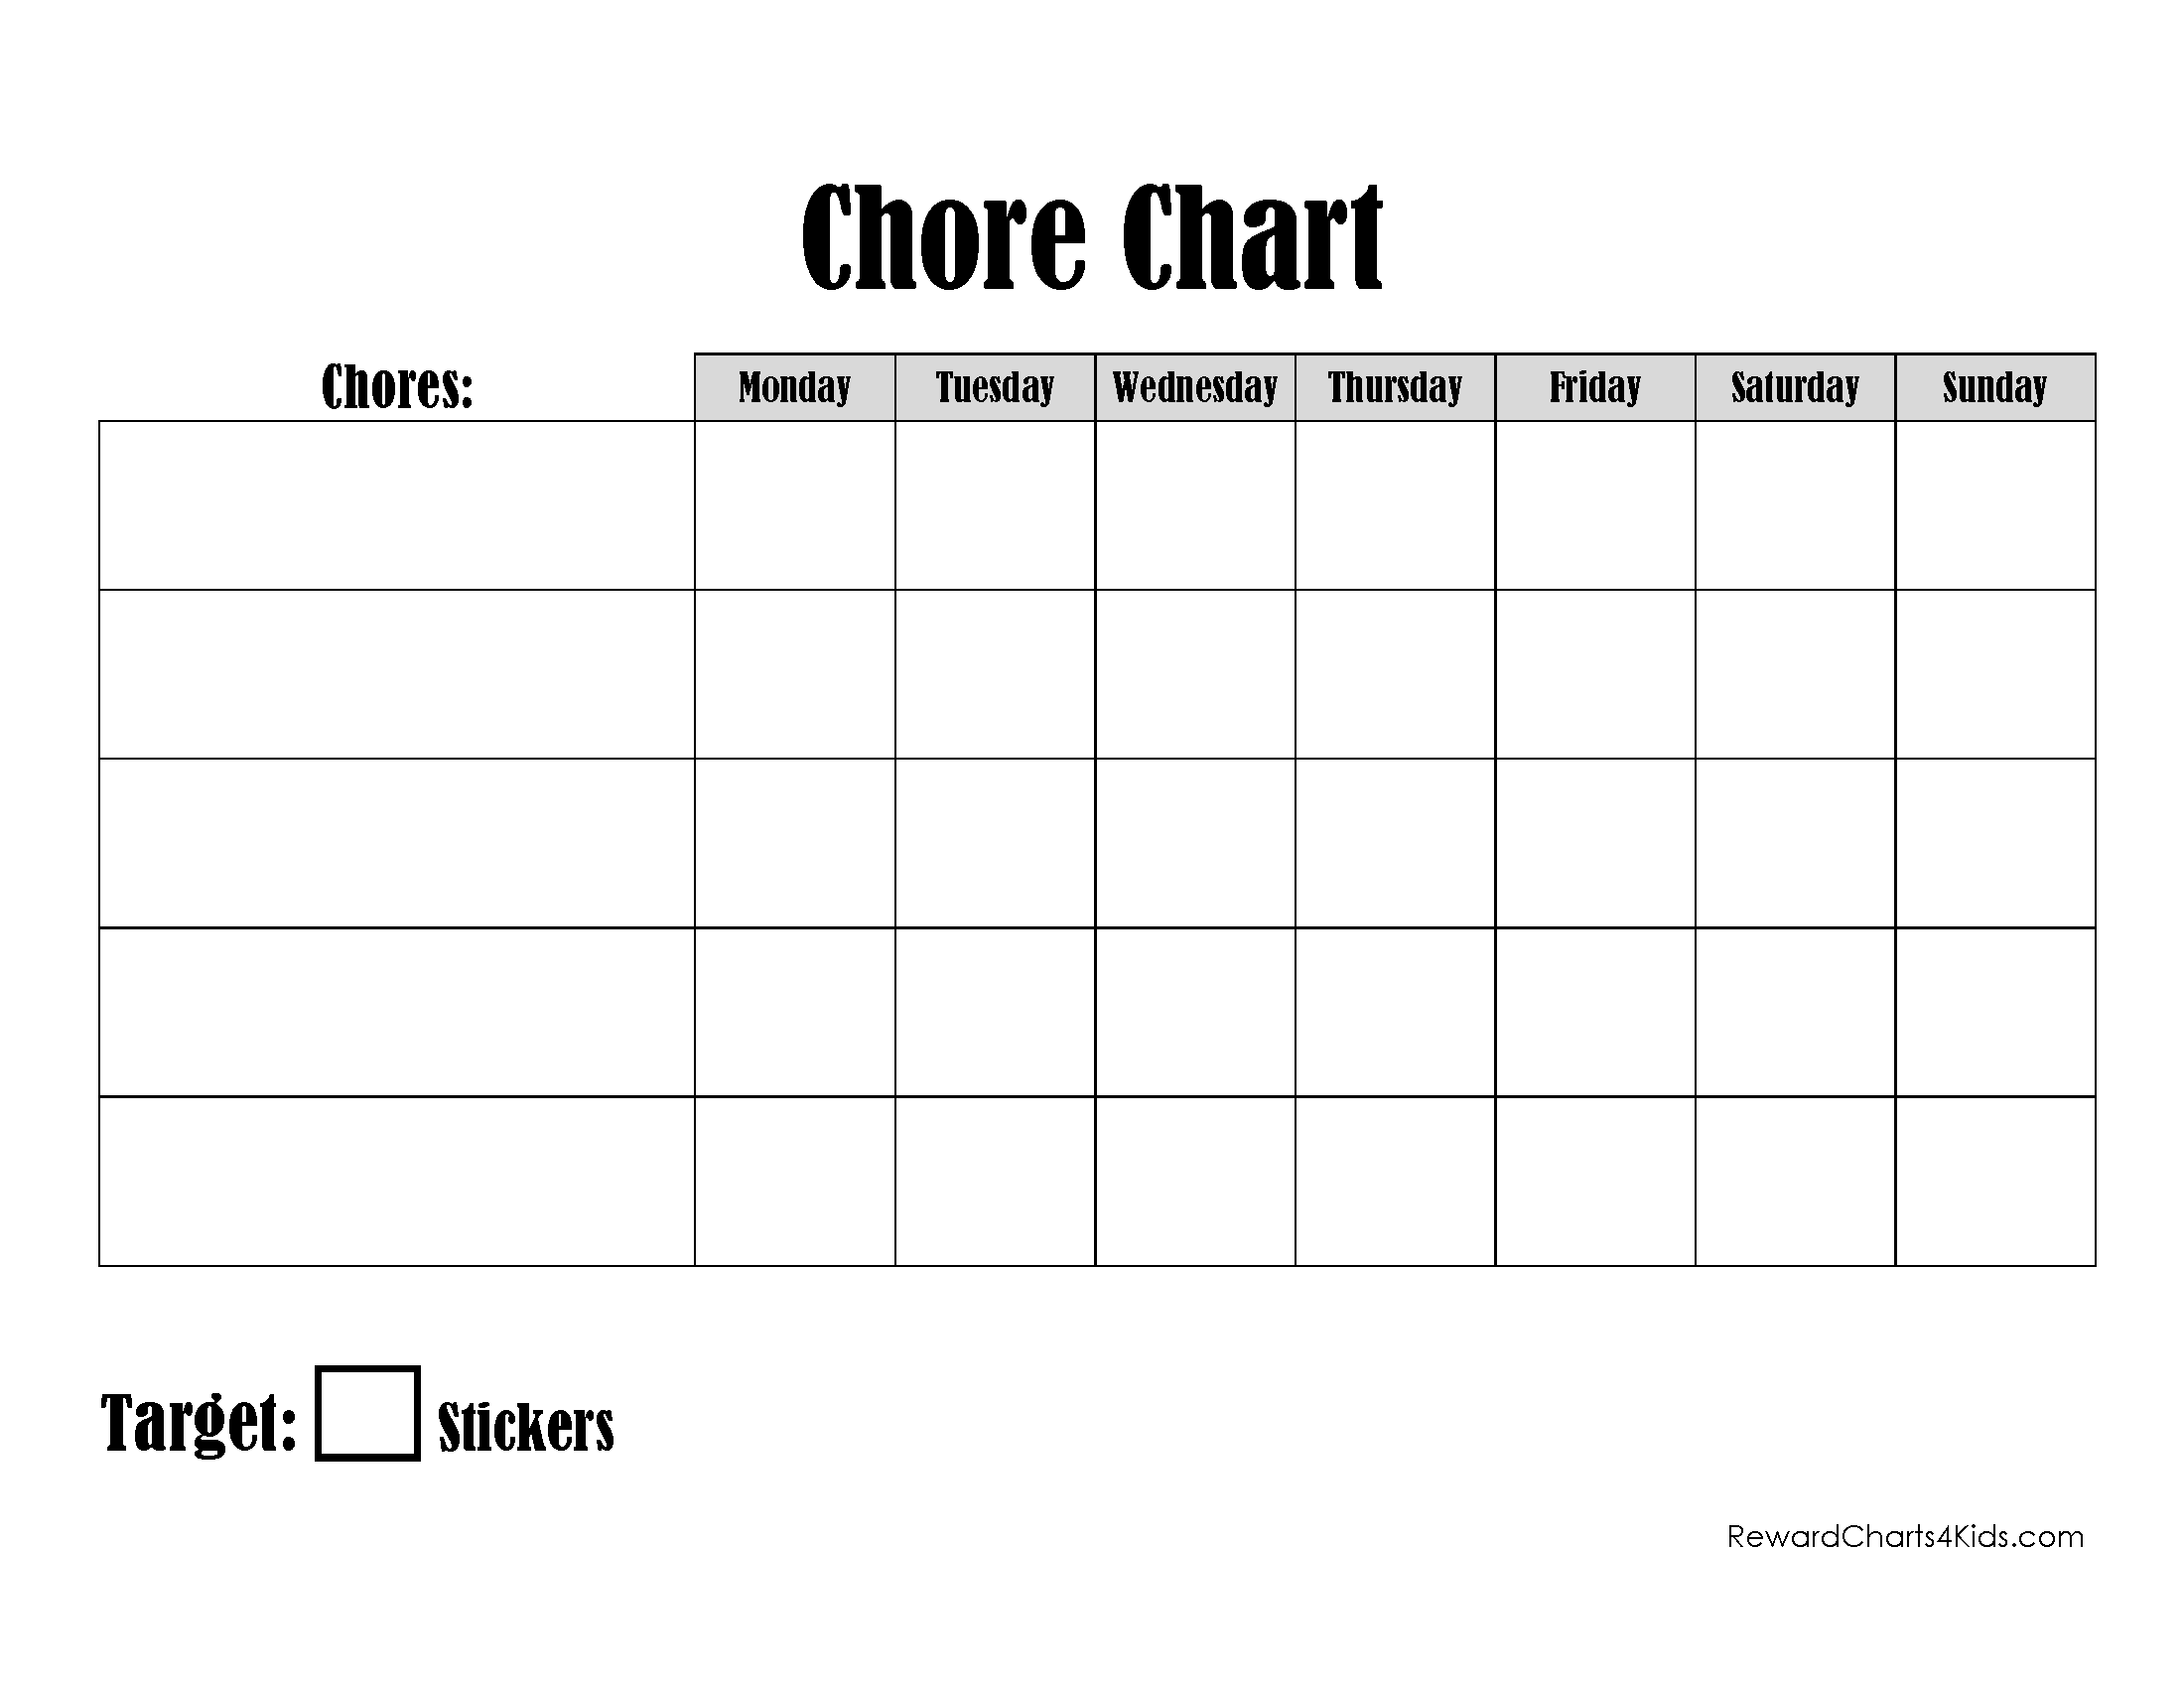 Child Chores Chart Template from www.rewardcharts4kids.com